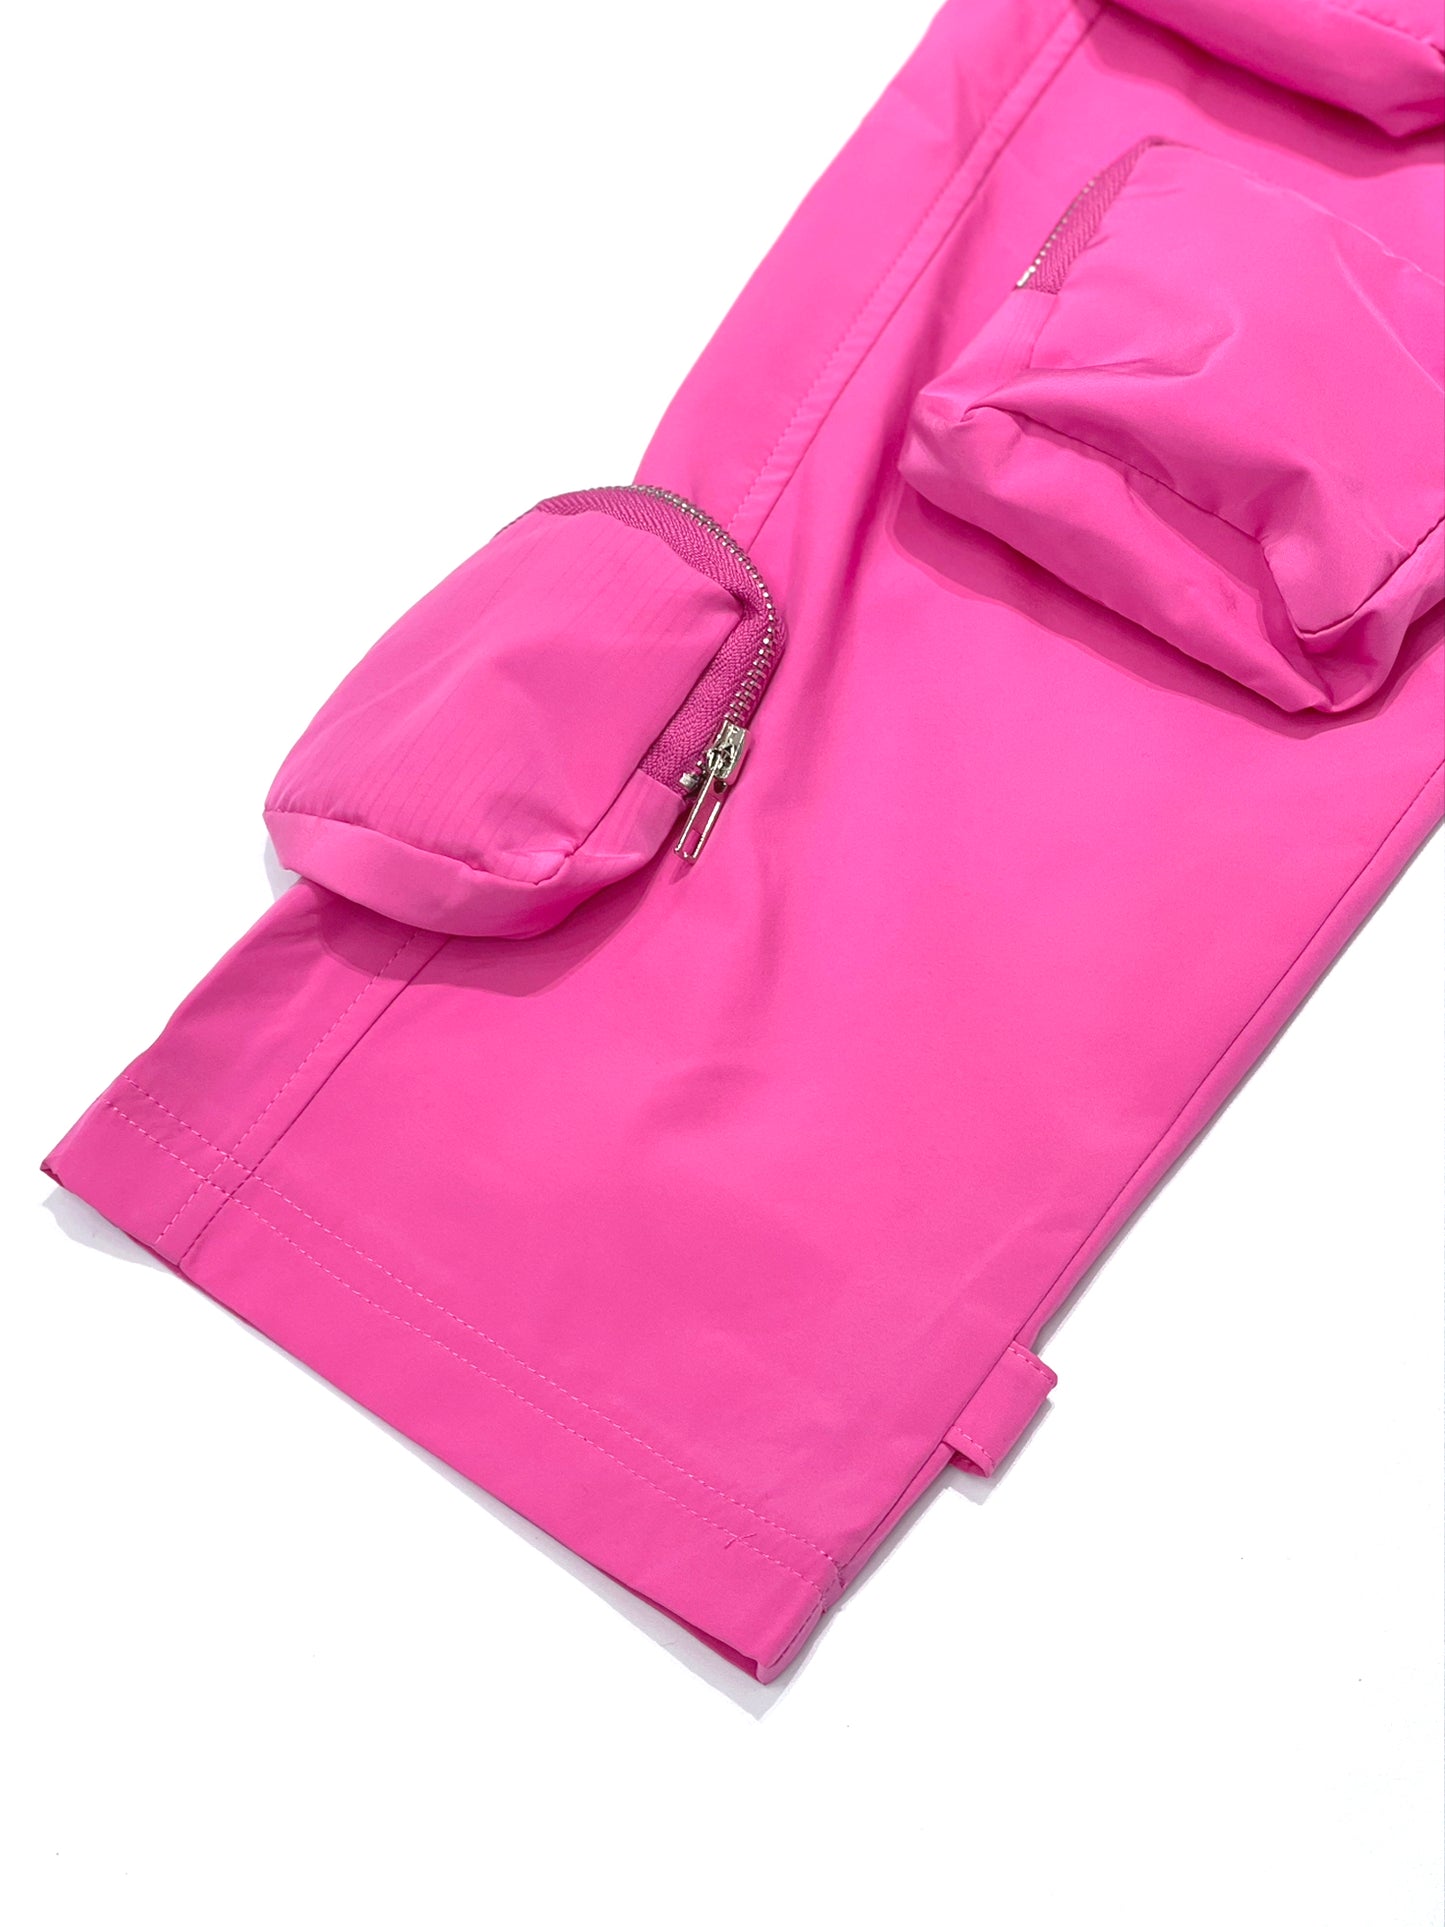 AONE4SURE 10 Bags Detachable Pants